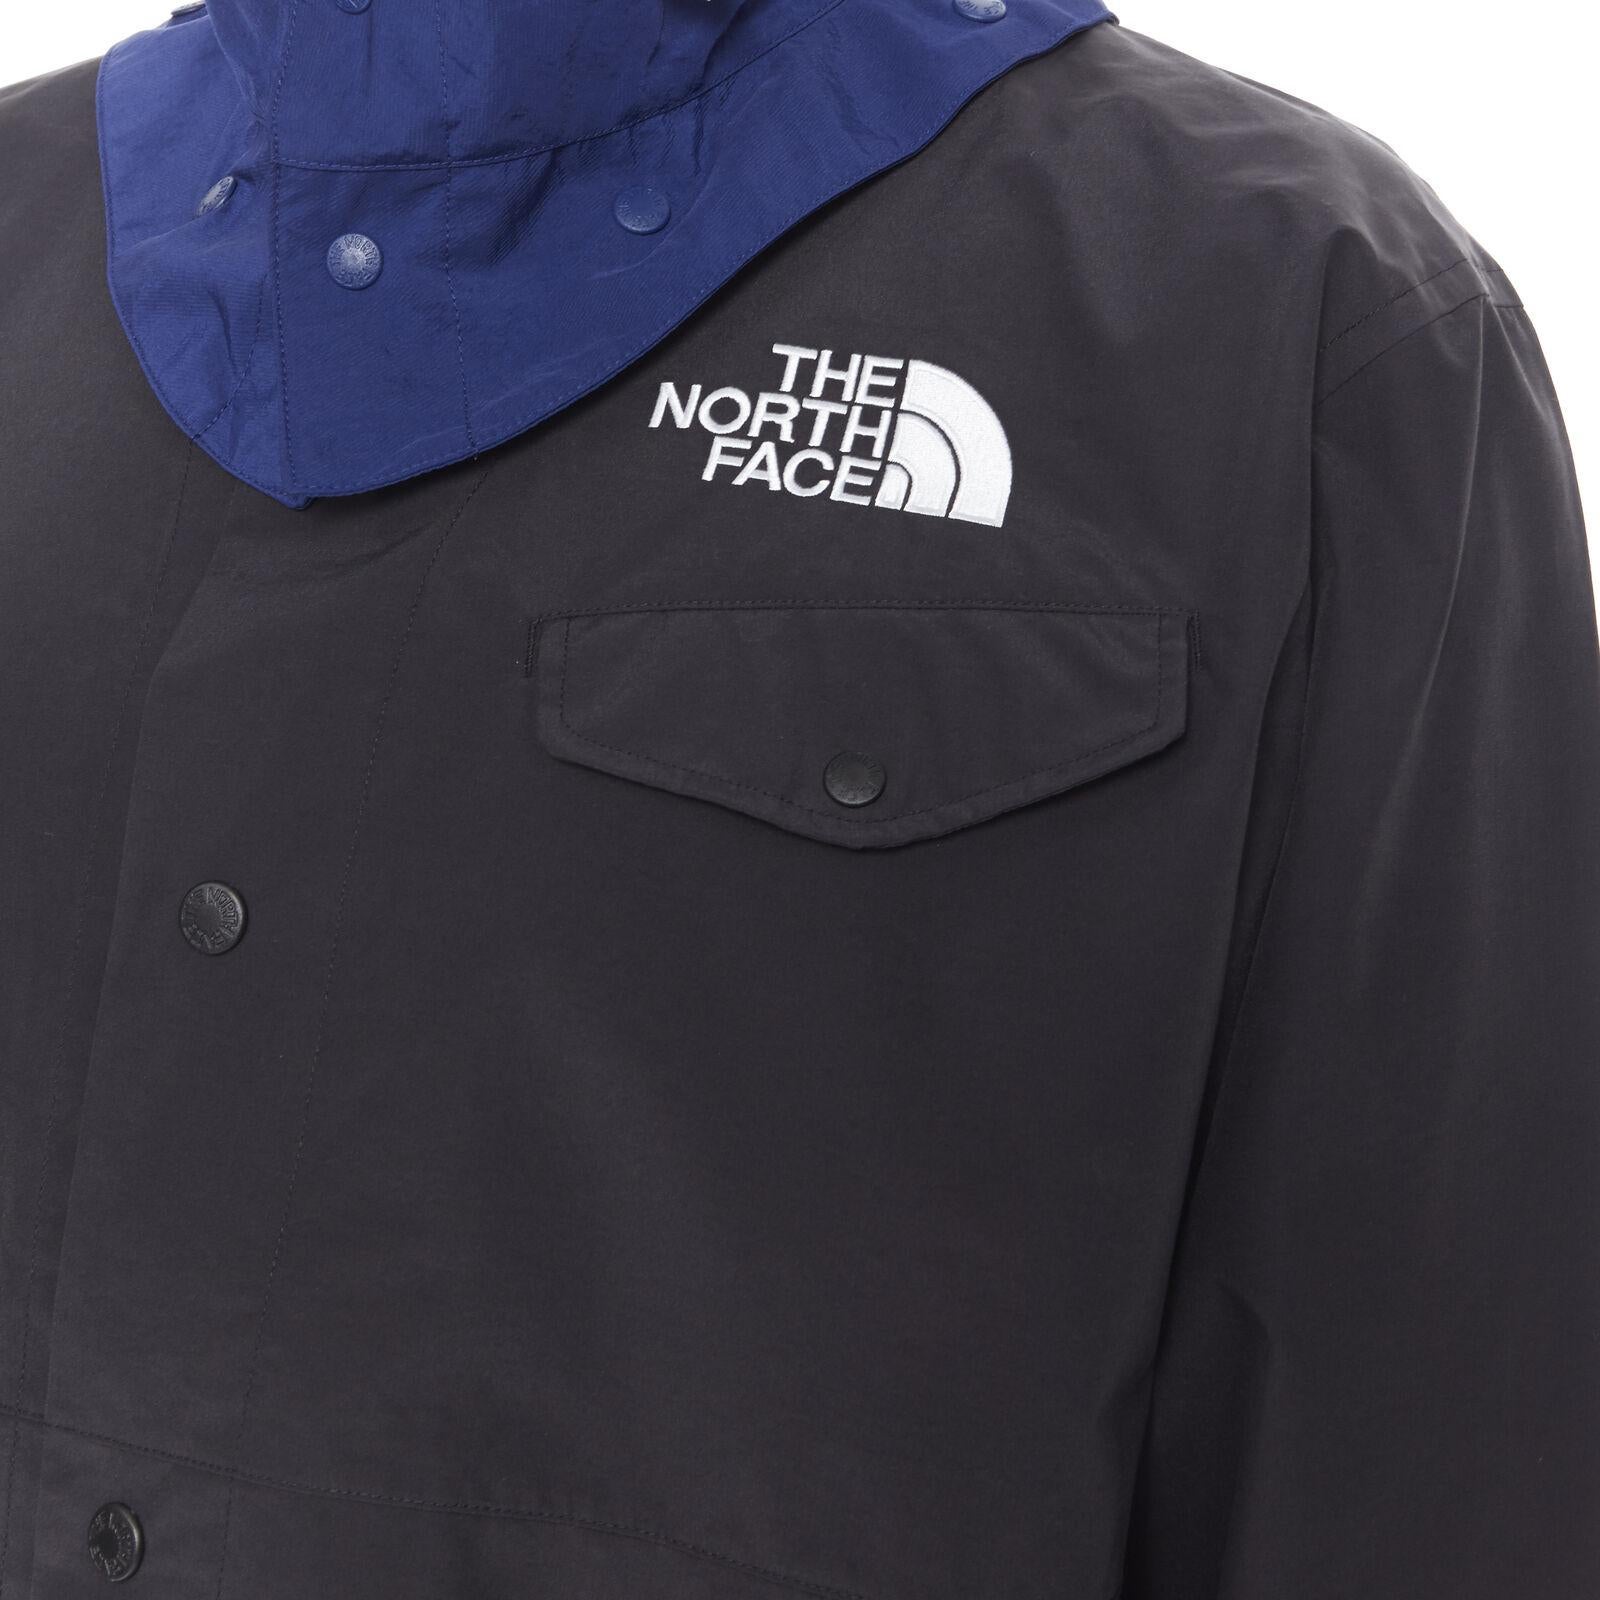 new THE NORTH FACE KAZUKI KURAISHI Black Label Charlie Duty Jacket Black Blue L For Sale 5